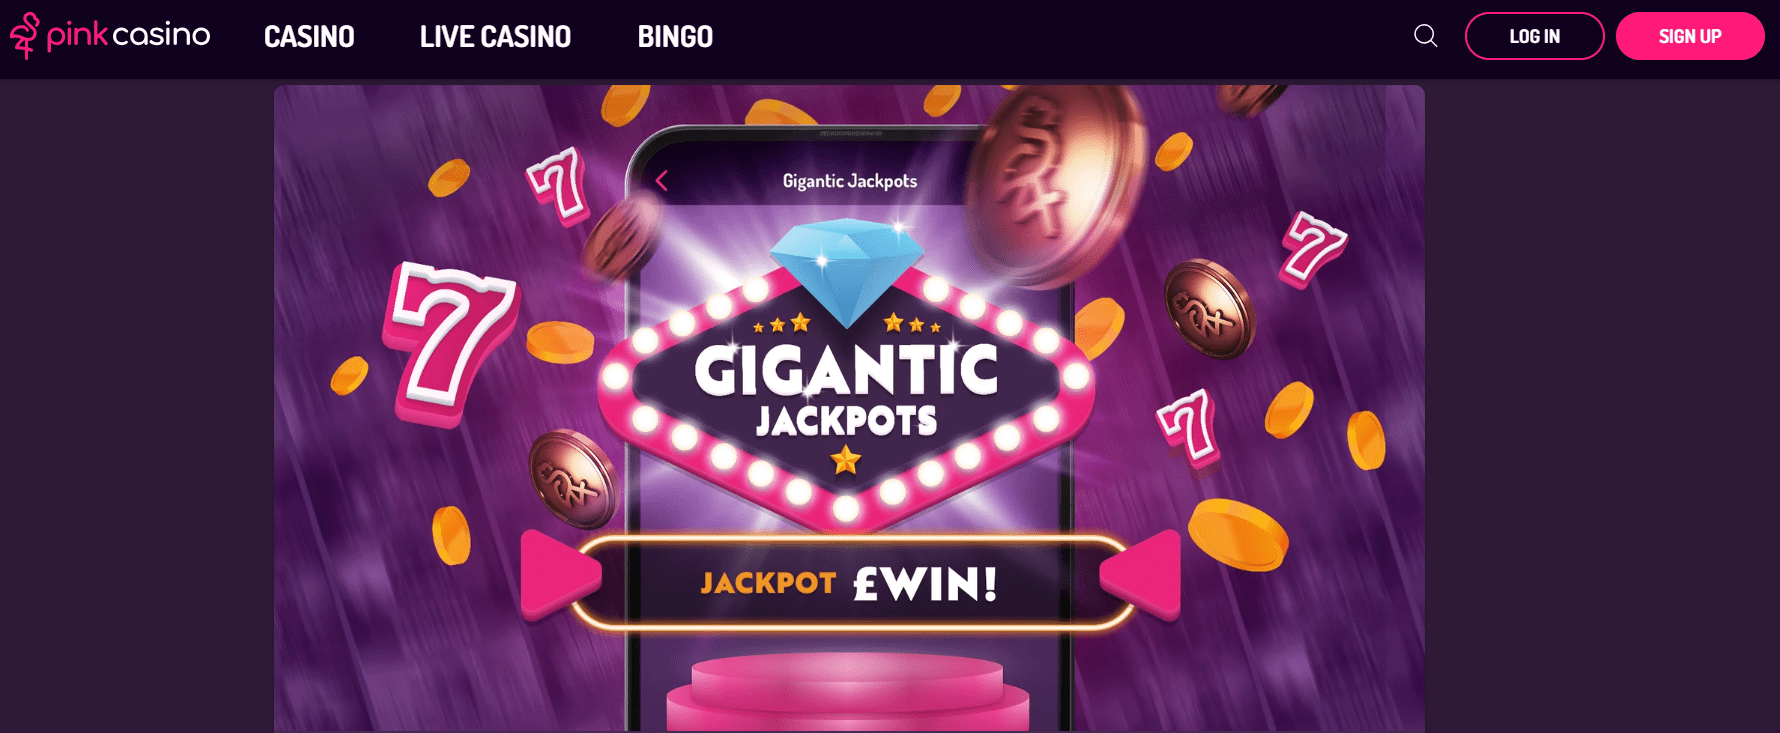 pink casino gigantic jackpots